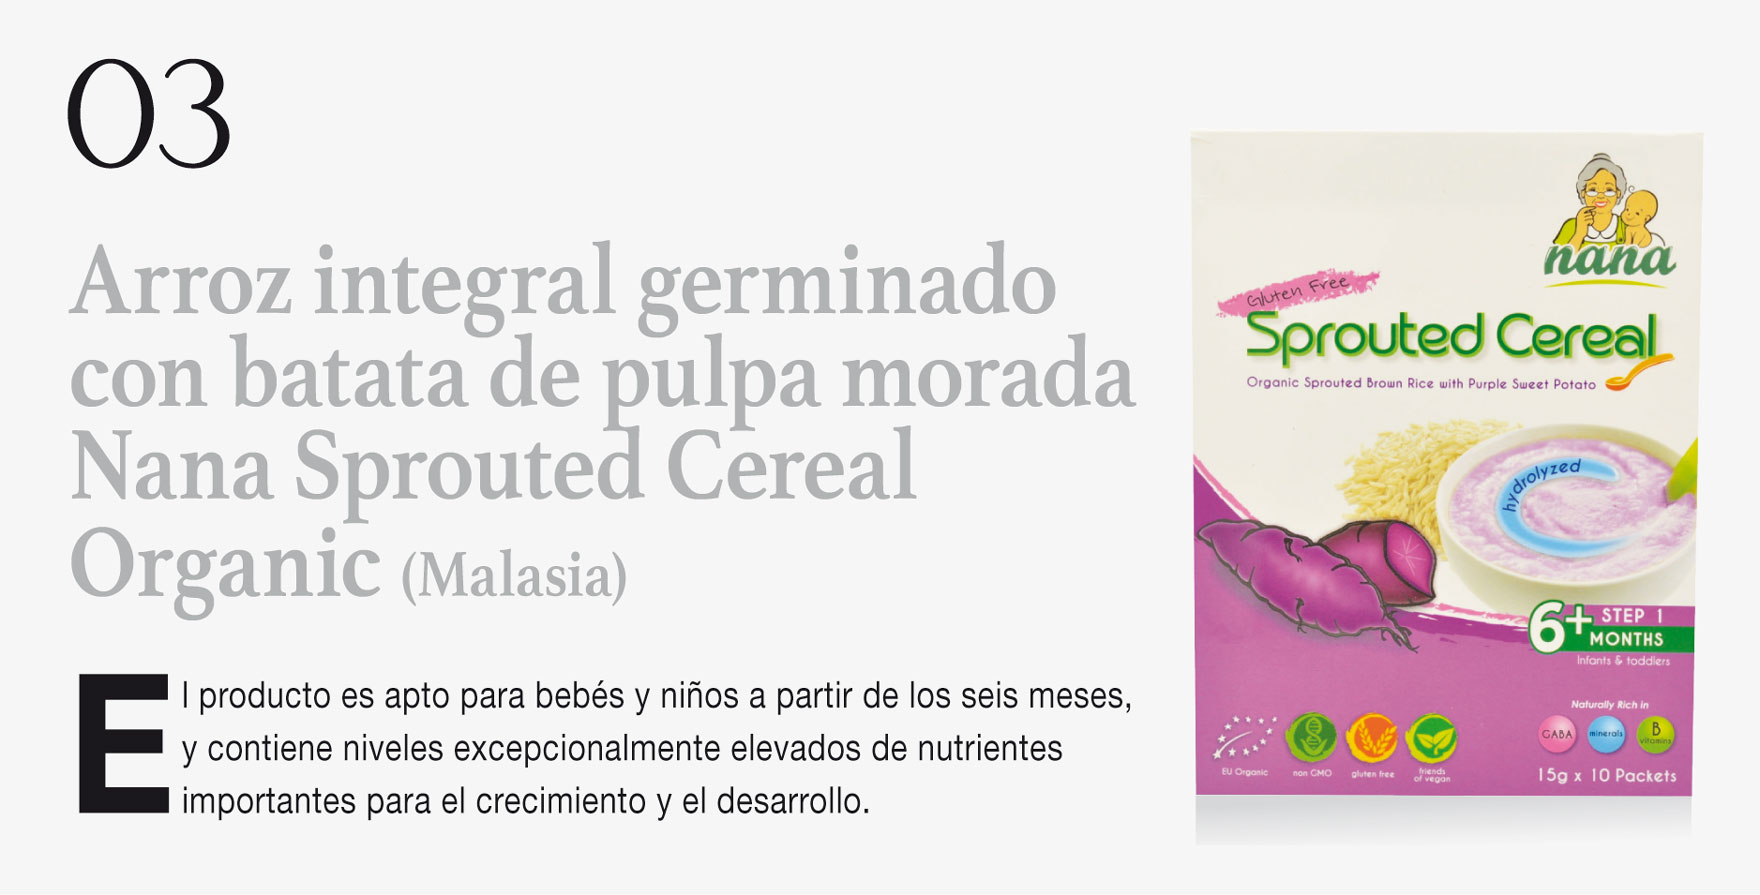 Arroz integral germinado con batata de pulpa morada Nana Sprouted Cereal Organic